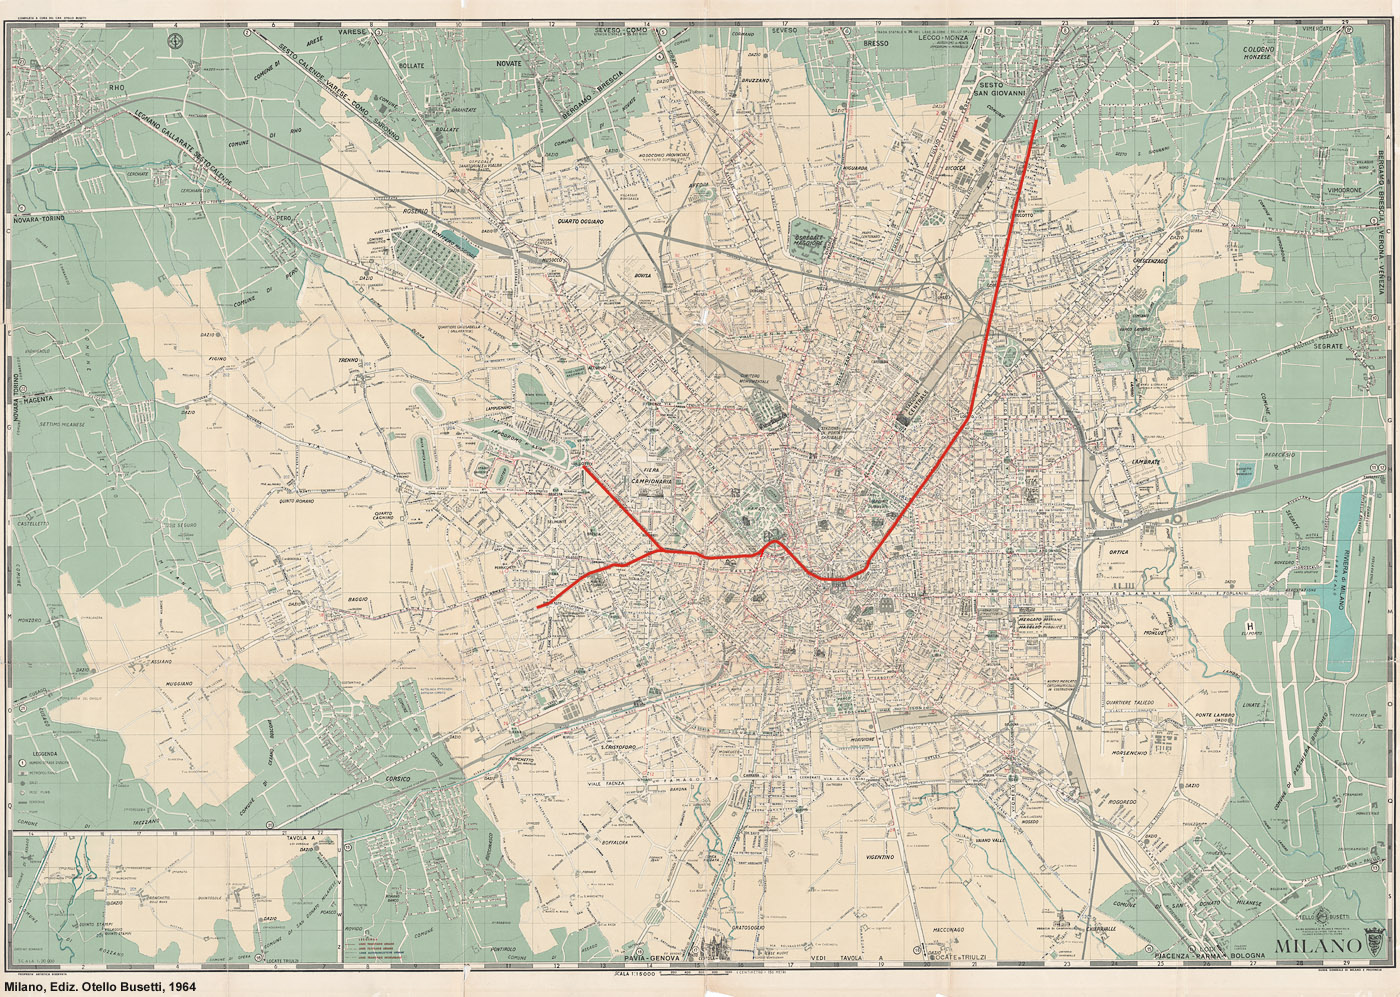 Milano 1964 - Milano, 1964, metropolitana.